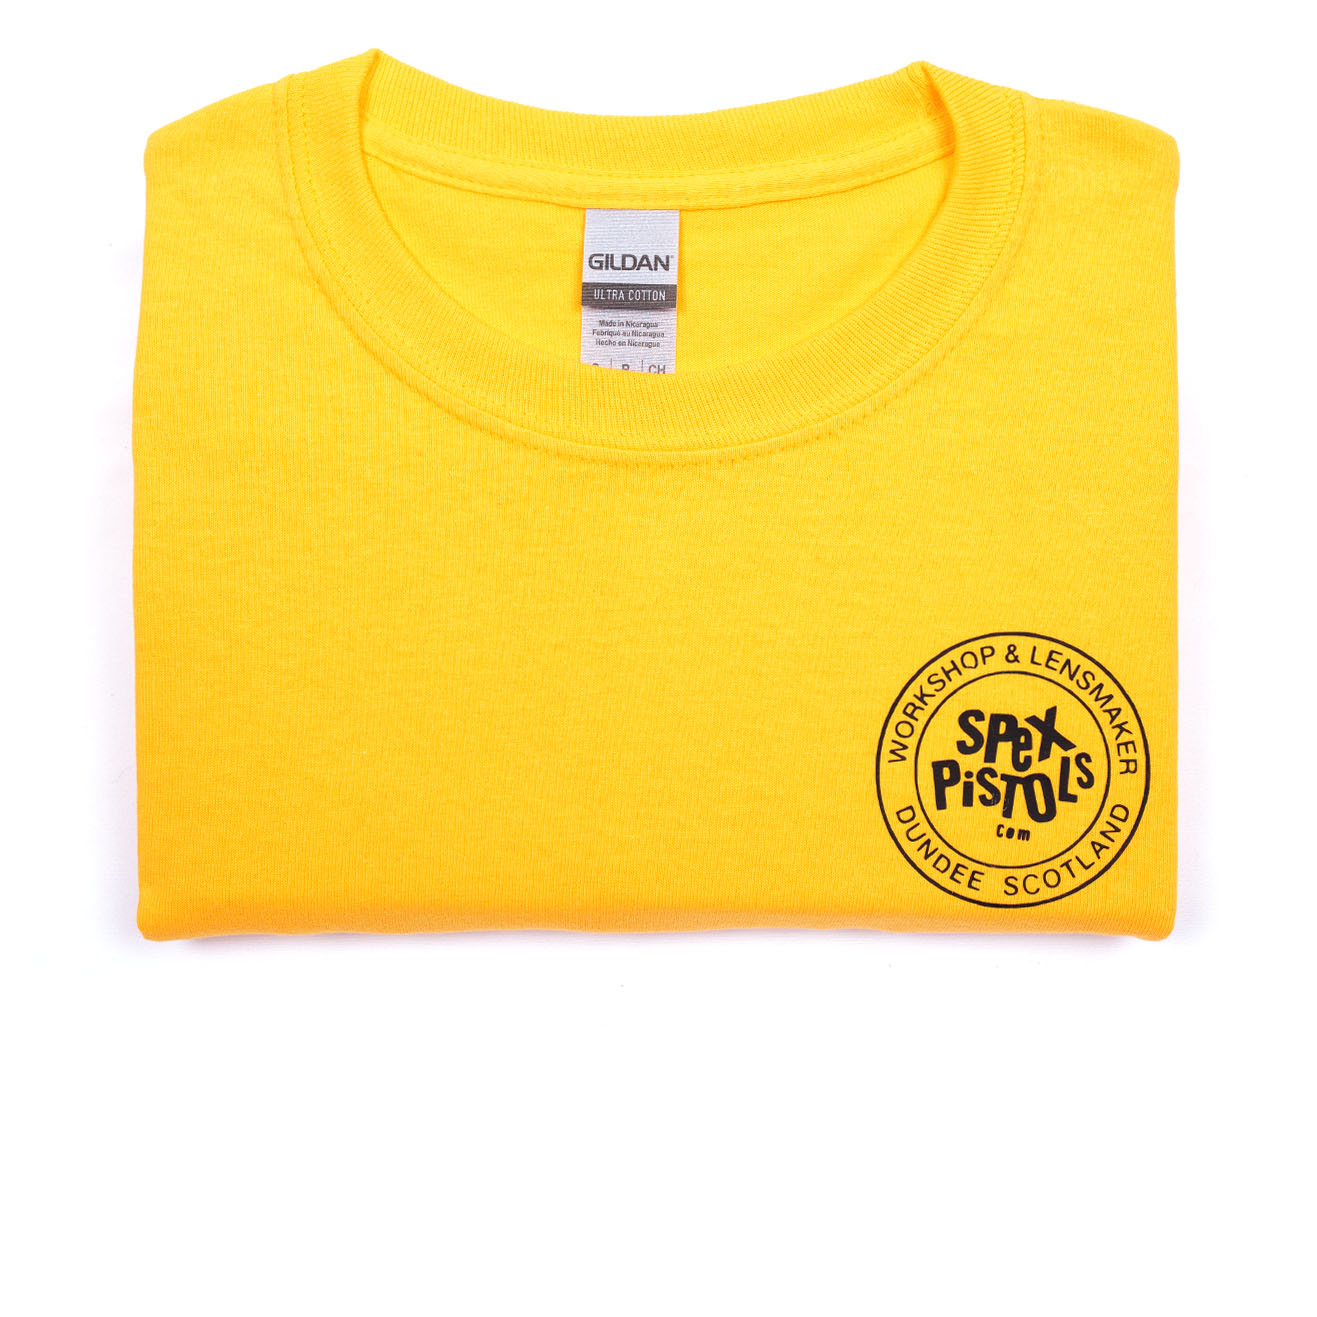 Spex Pistols' Long Sleeve Tee in Yellow